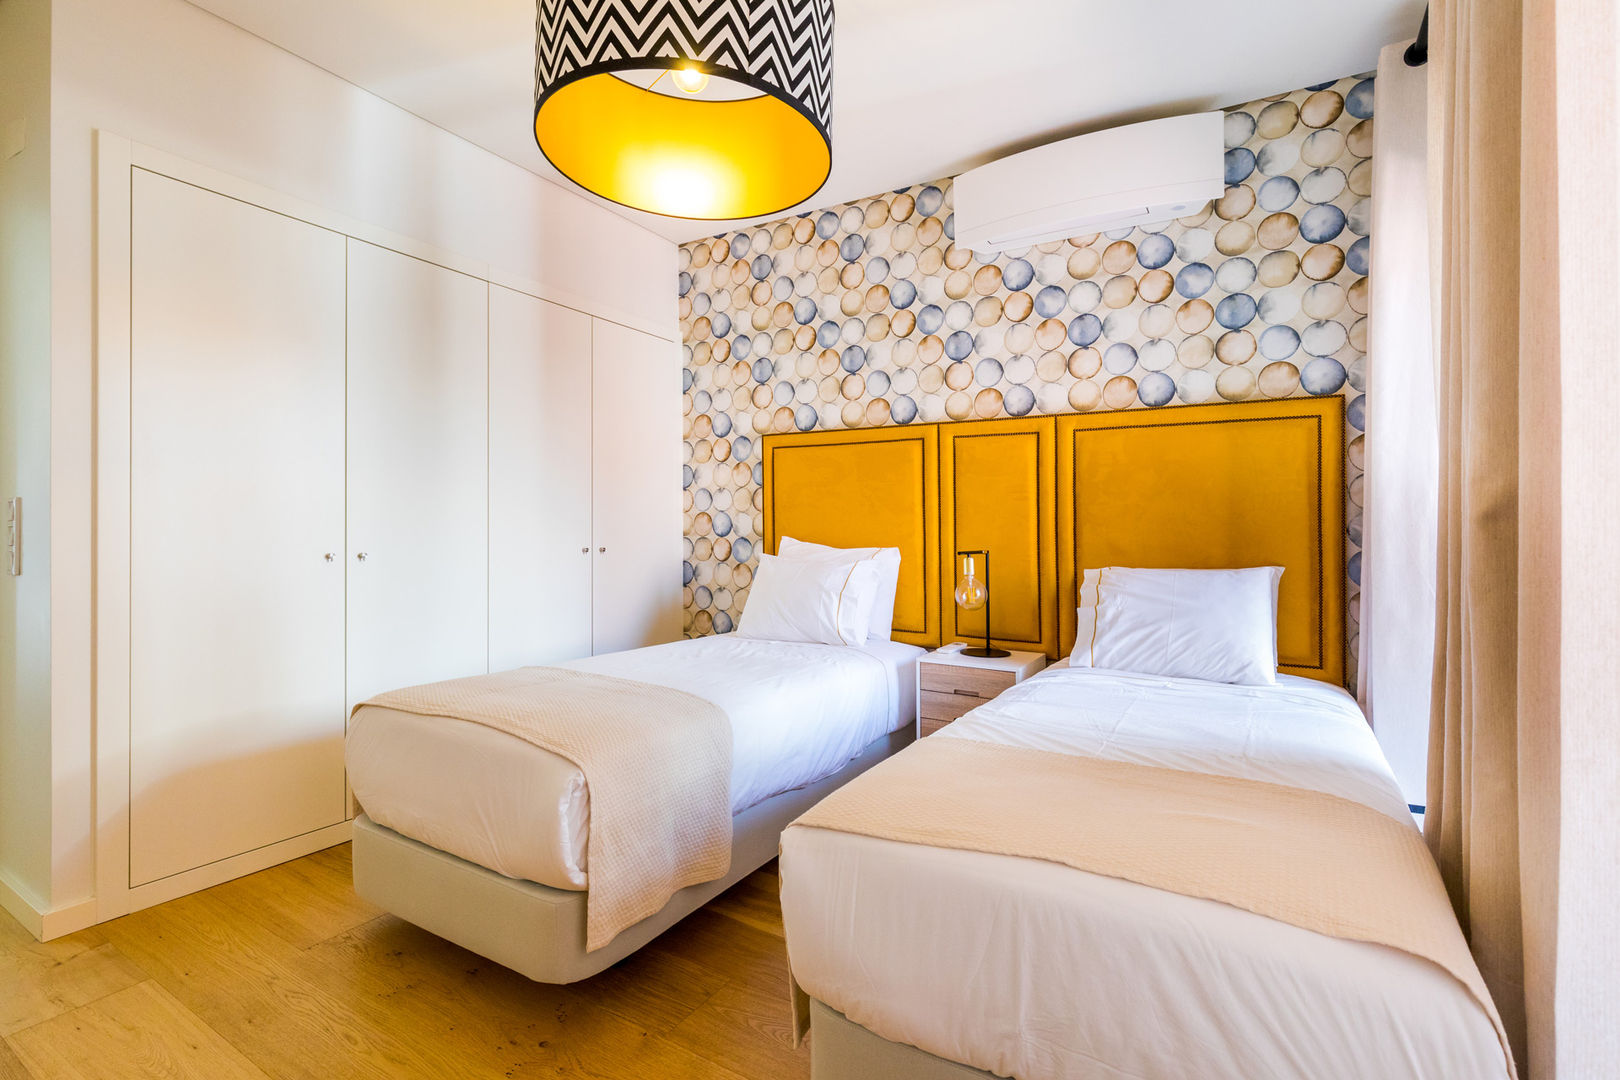 Bairro Alto - Apartamento T2, Sizz Design Sizz Design Scandinavian style bedroom